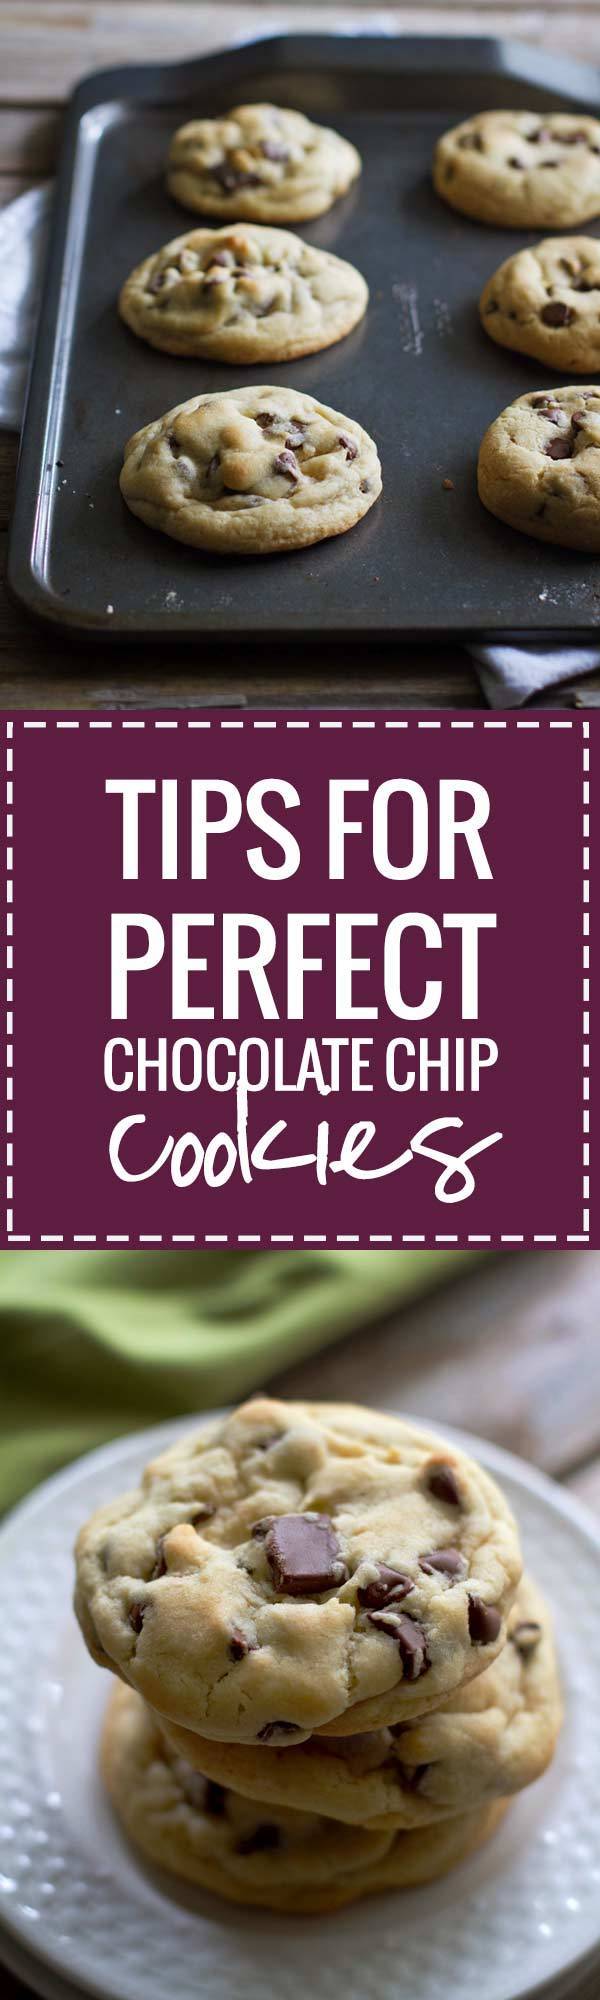 Berikut adalah tips sederhana saya untuk kue chip cokelat yang sempurna dengan resep mudah untuk kue chip cokelat favorit saya sepanjang masa, klasik, dan sempurna.